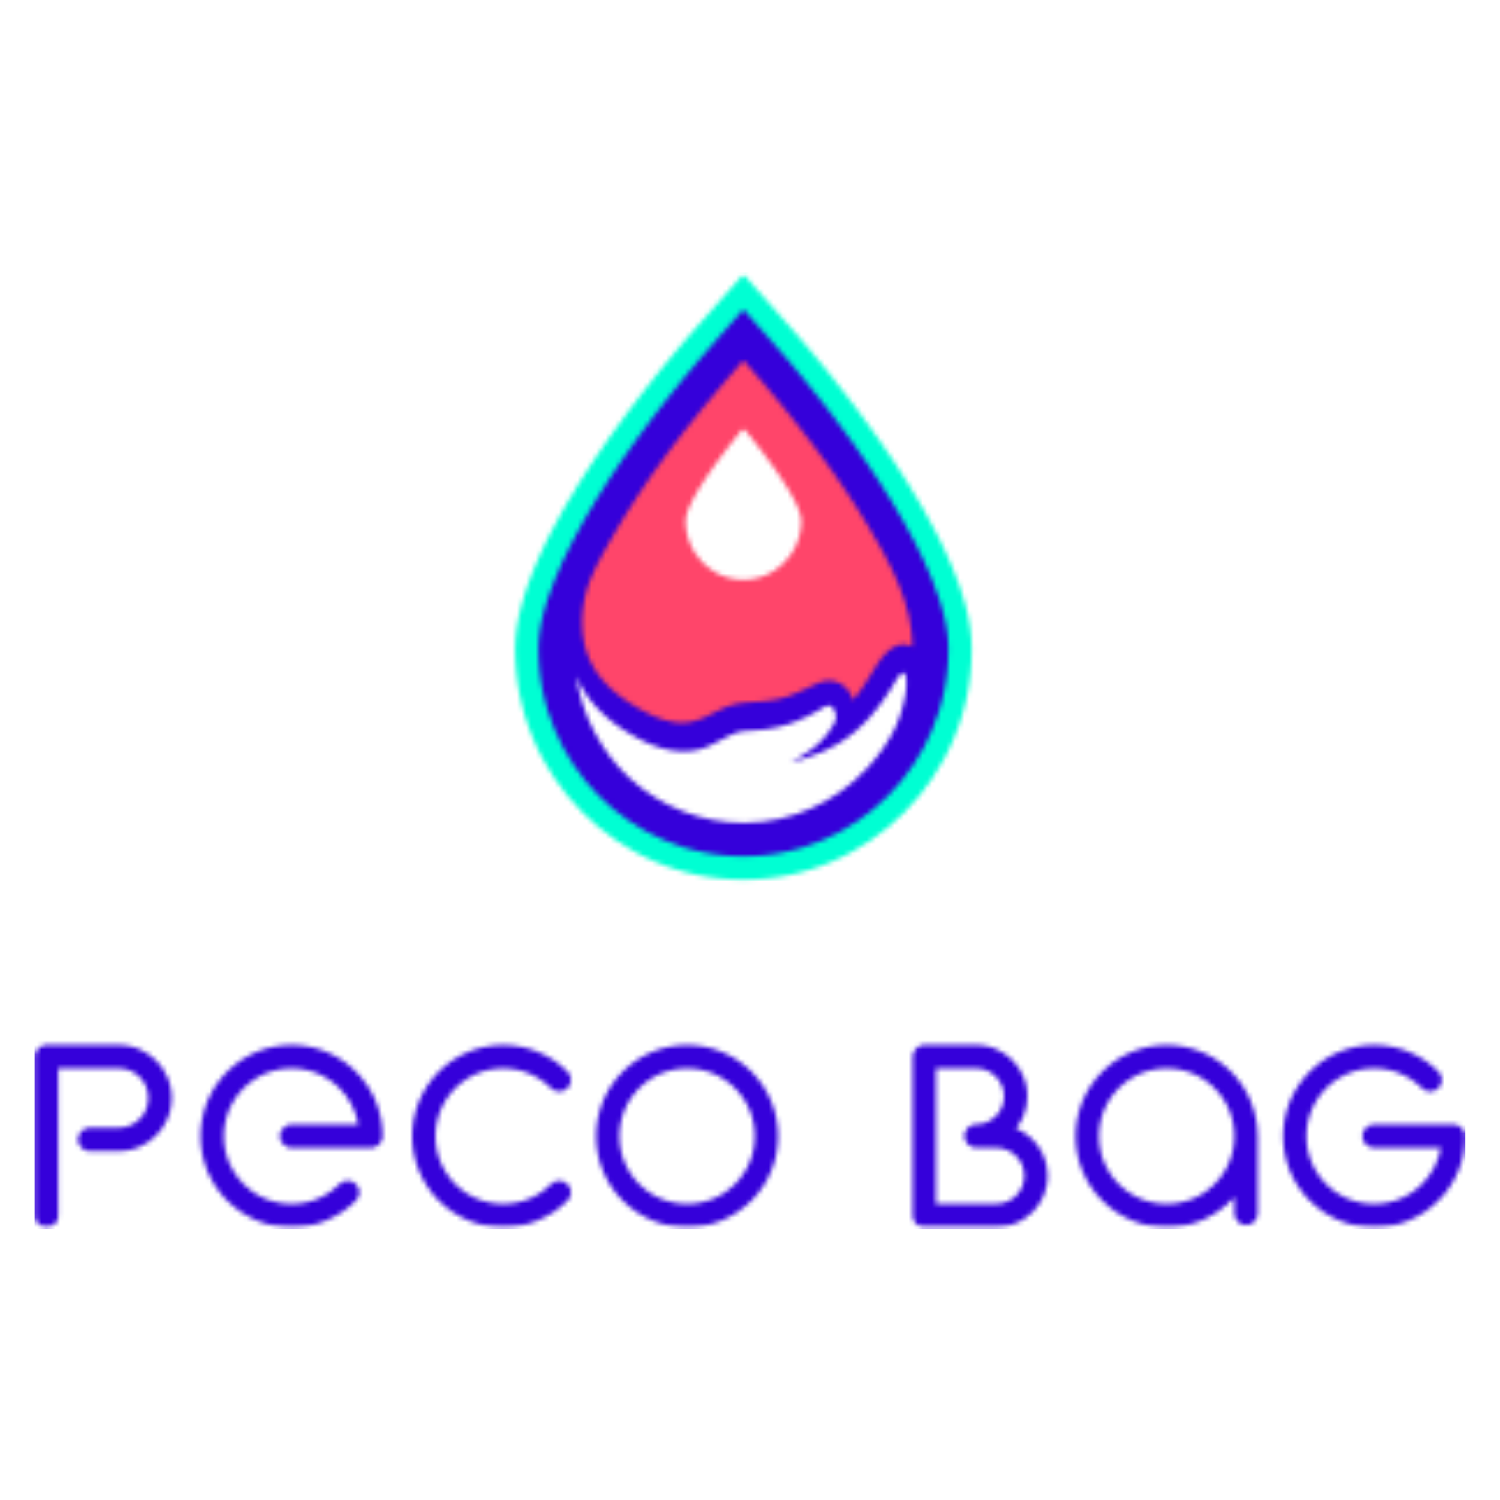 Peco Bag